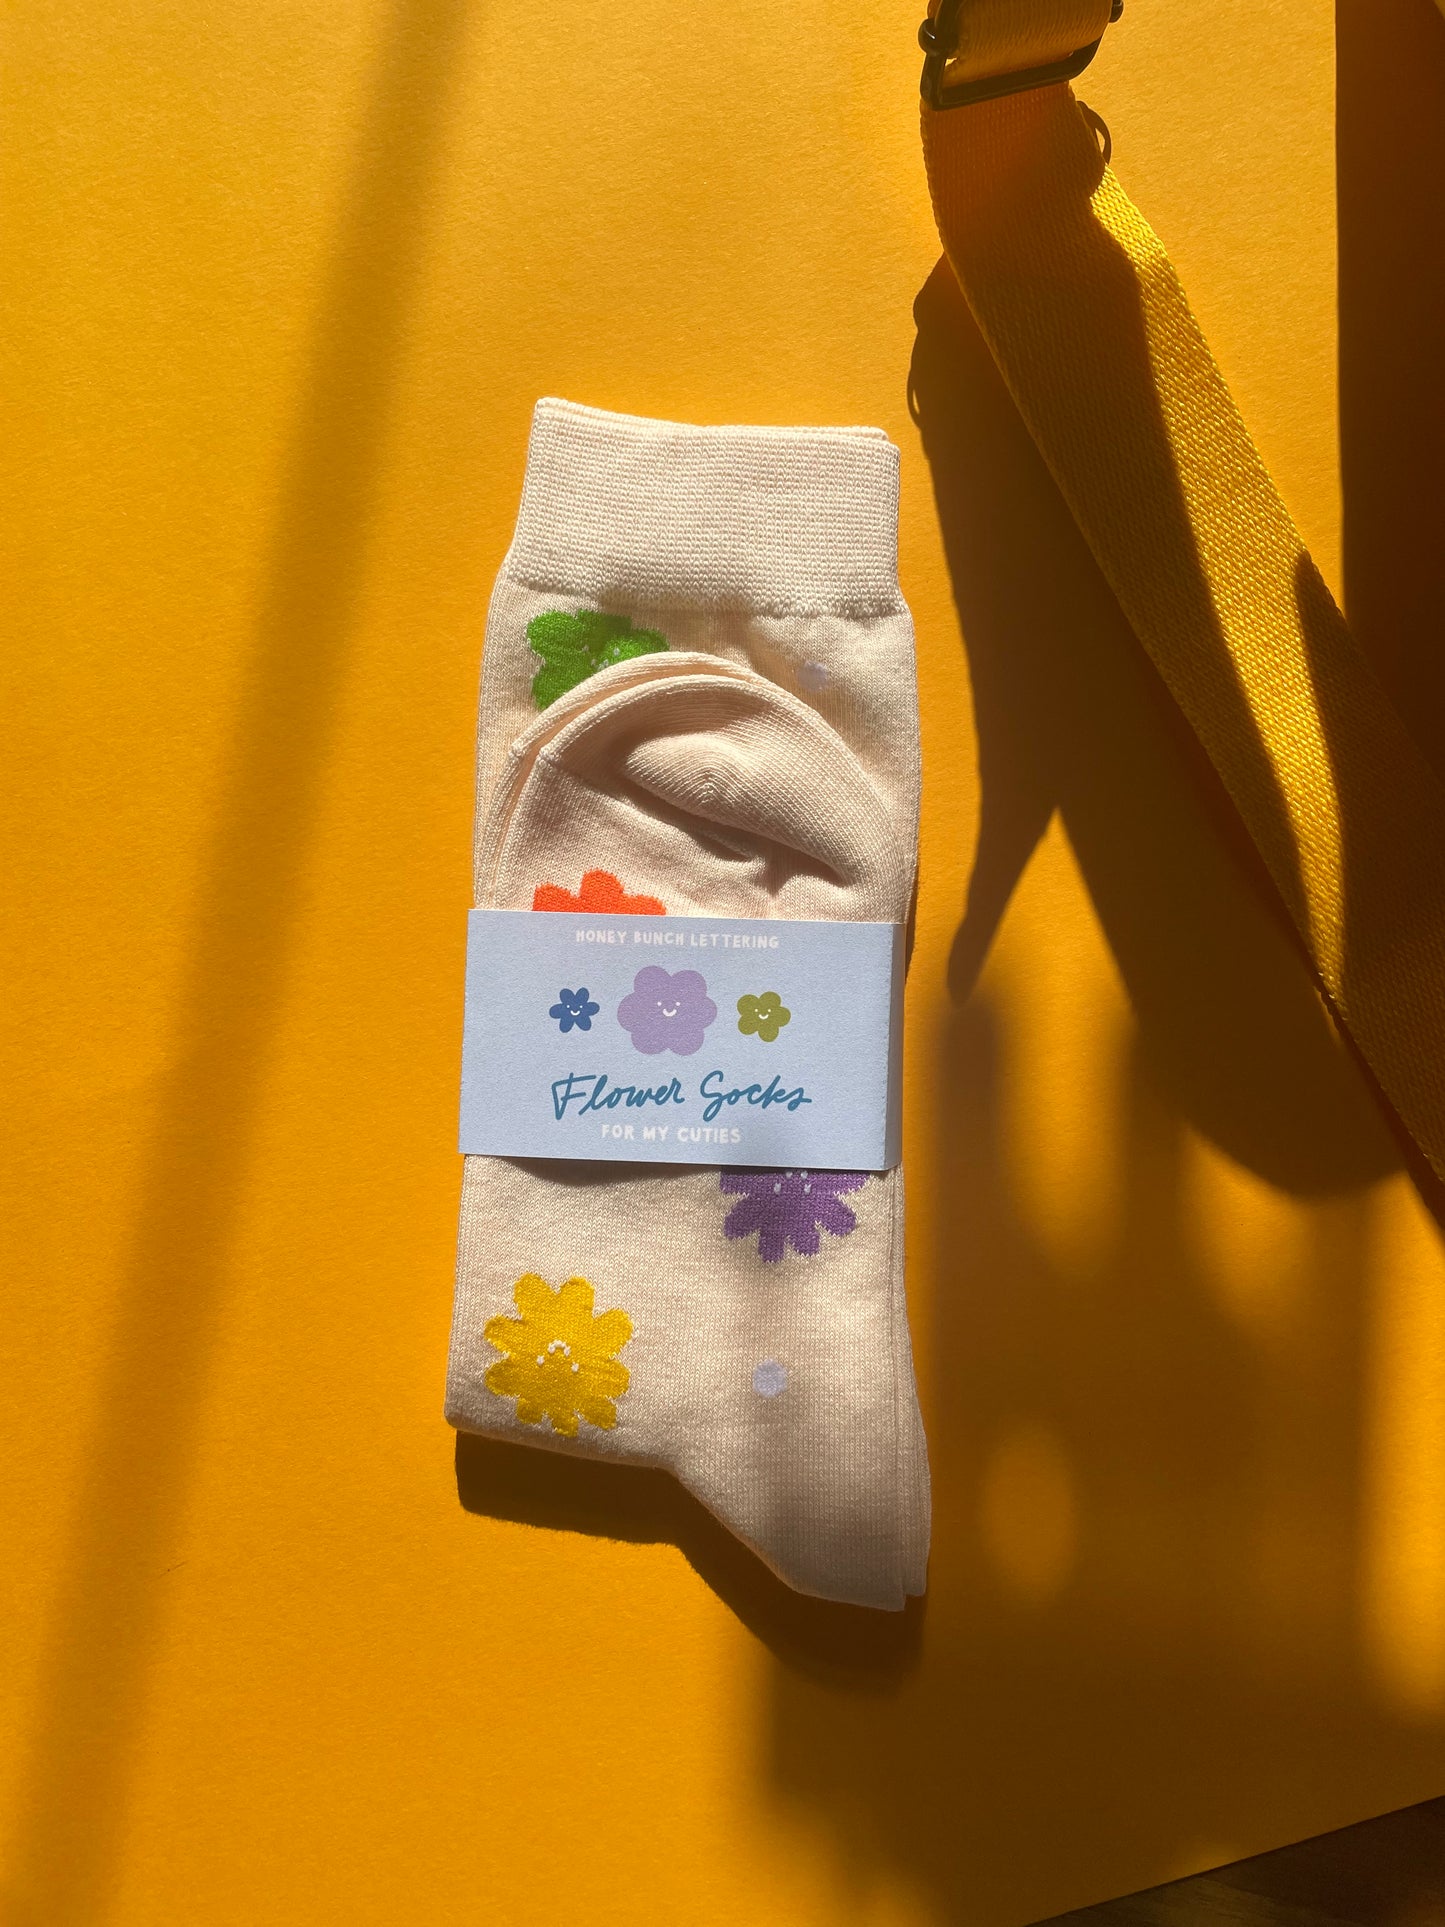 Happy Flower Socks